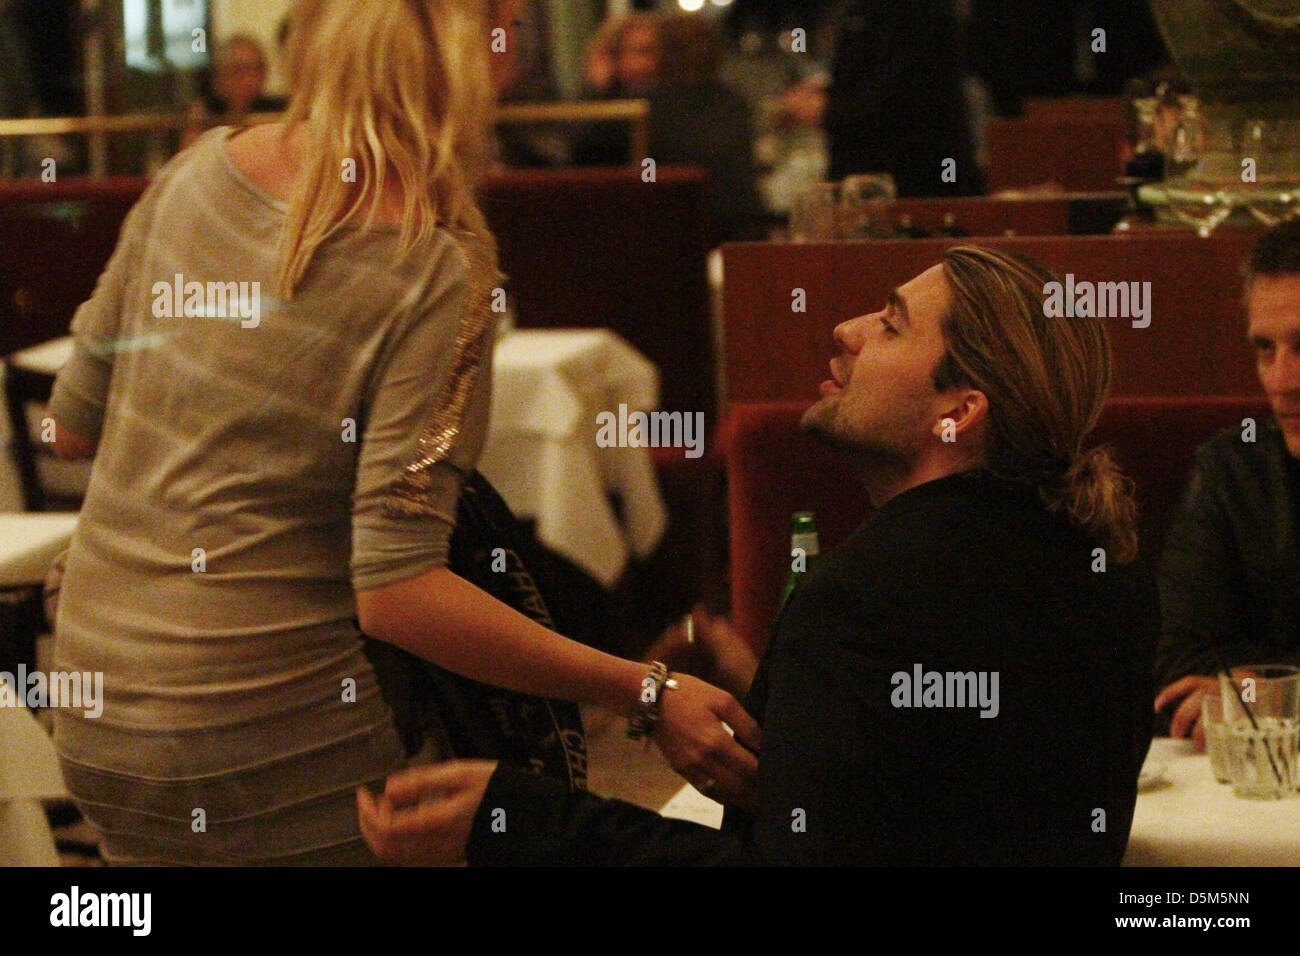 David Garrett and an unidentified female having dinner at Borchardt restaurant. Berlin, Germany - Stock Photo